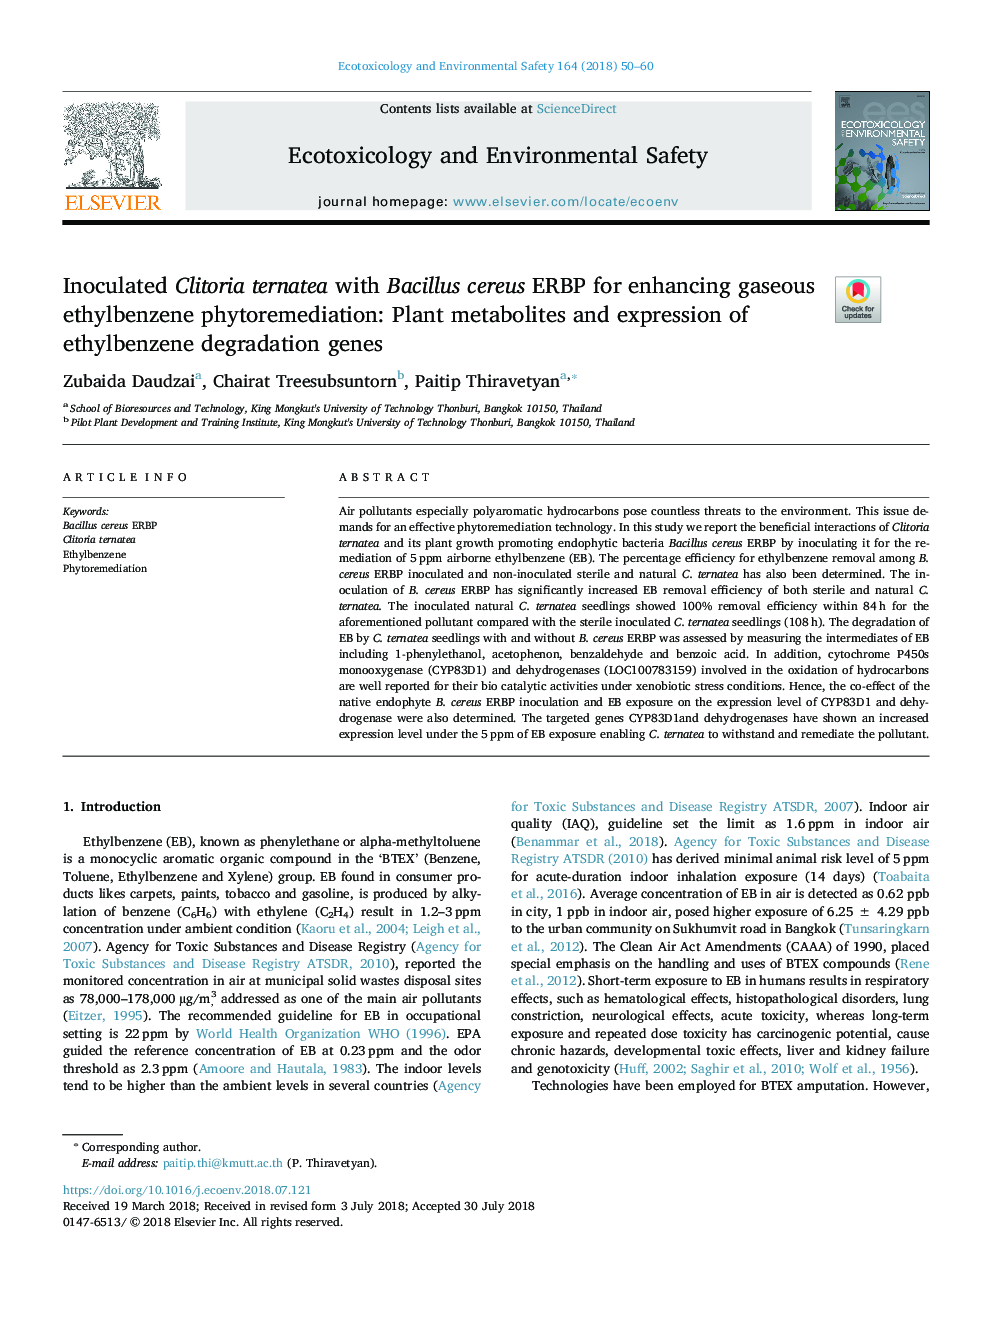 Inoculated Clitoria ternatea with Bacillus cereus ERBP for enhancing gaseous ethylbenzene phytoremediation: Plant metabolites and expression of ethylbenzene degradation genes